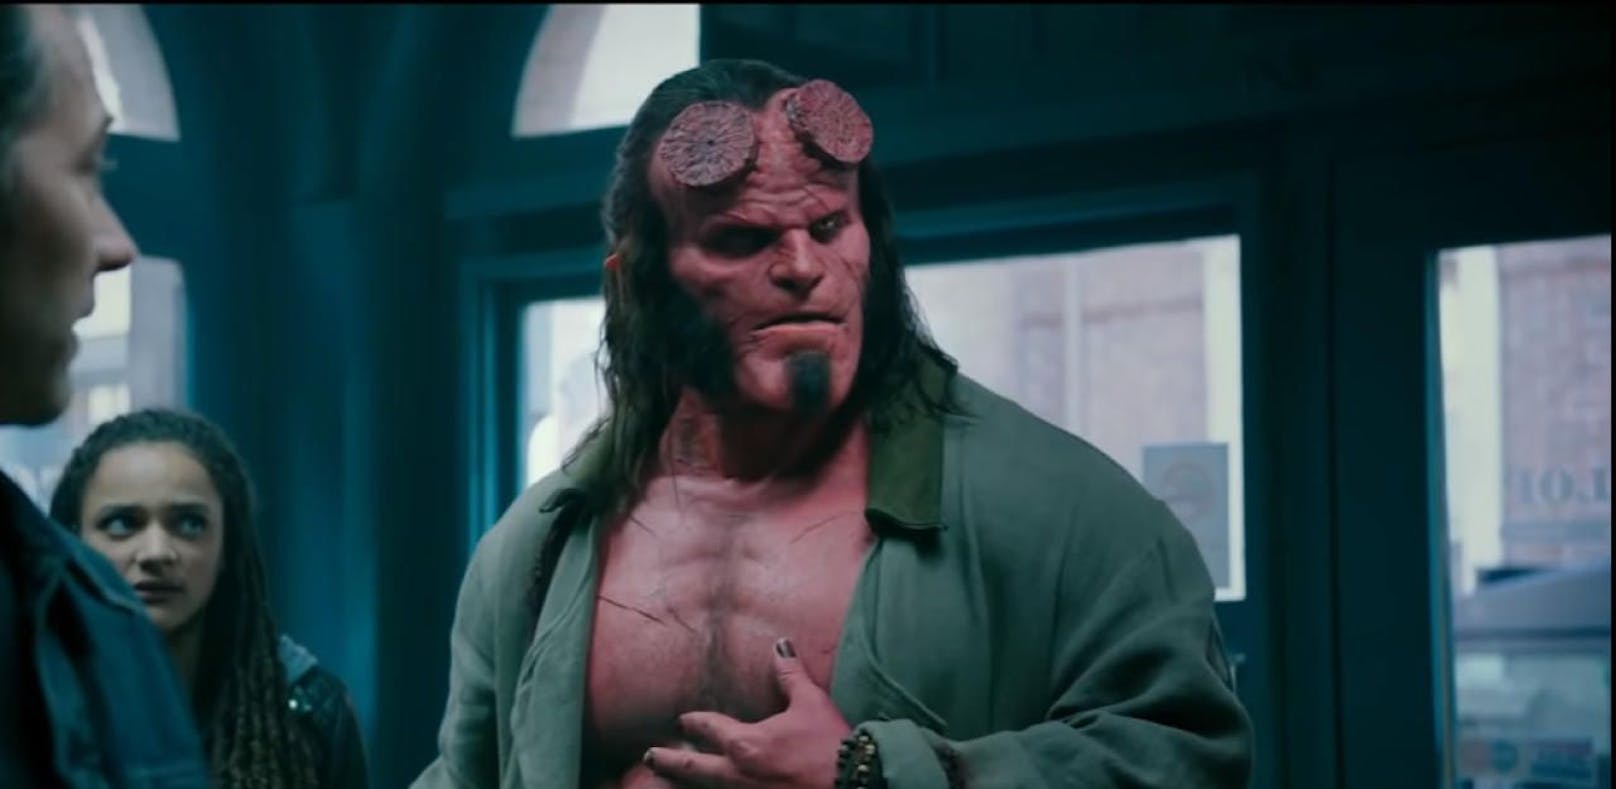 Erster Trailer zeigt David Harbour als "Hellboy"